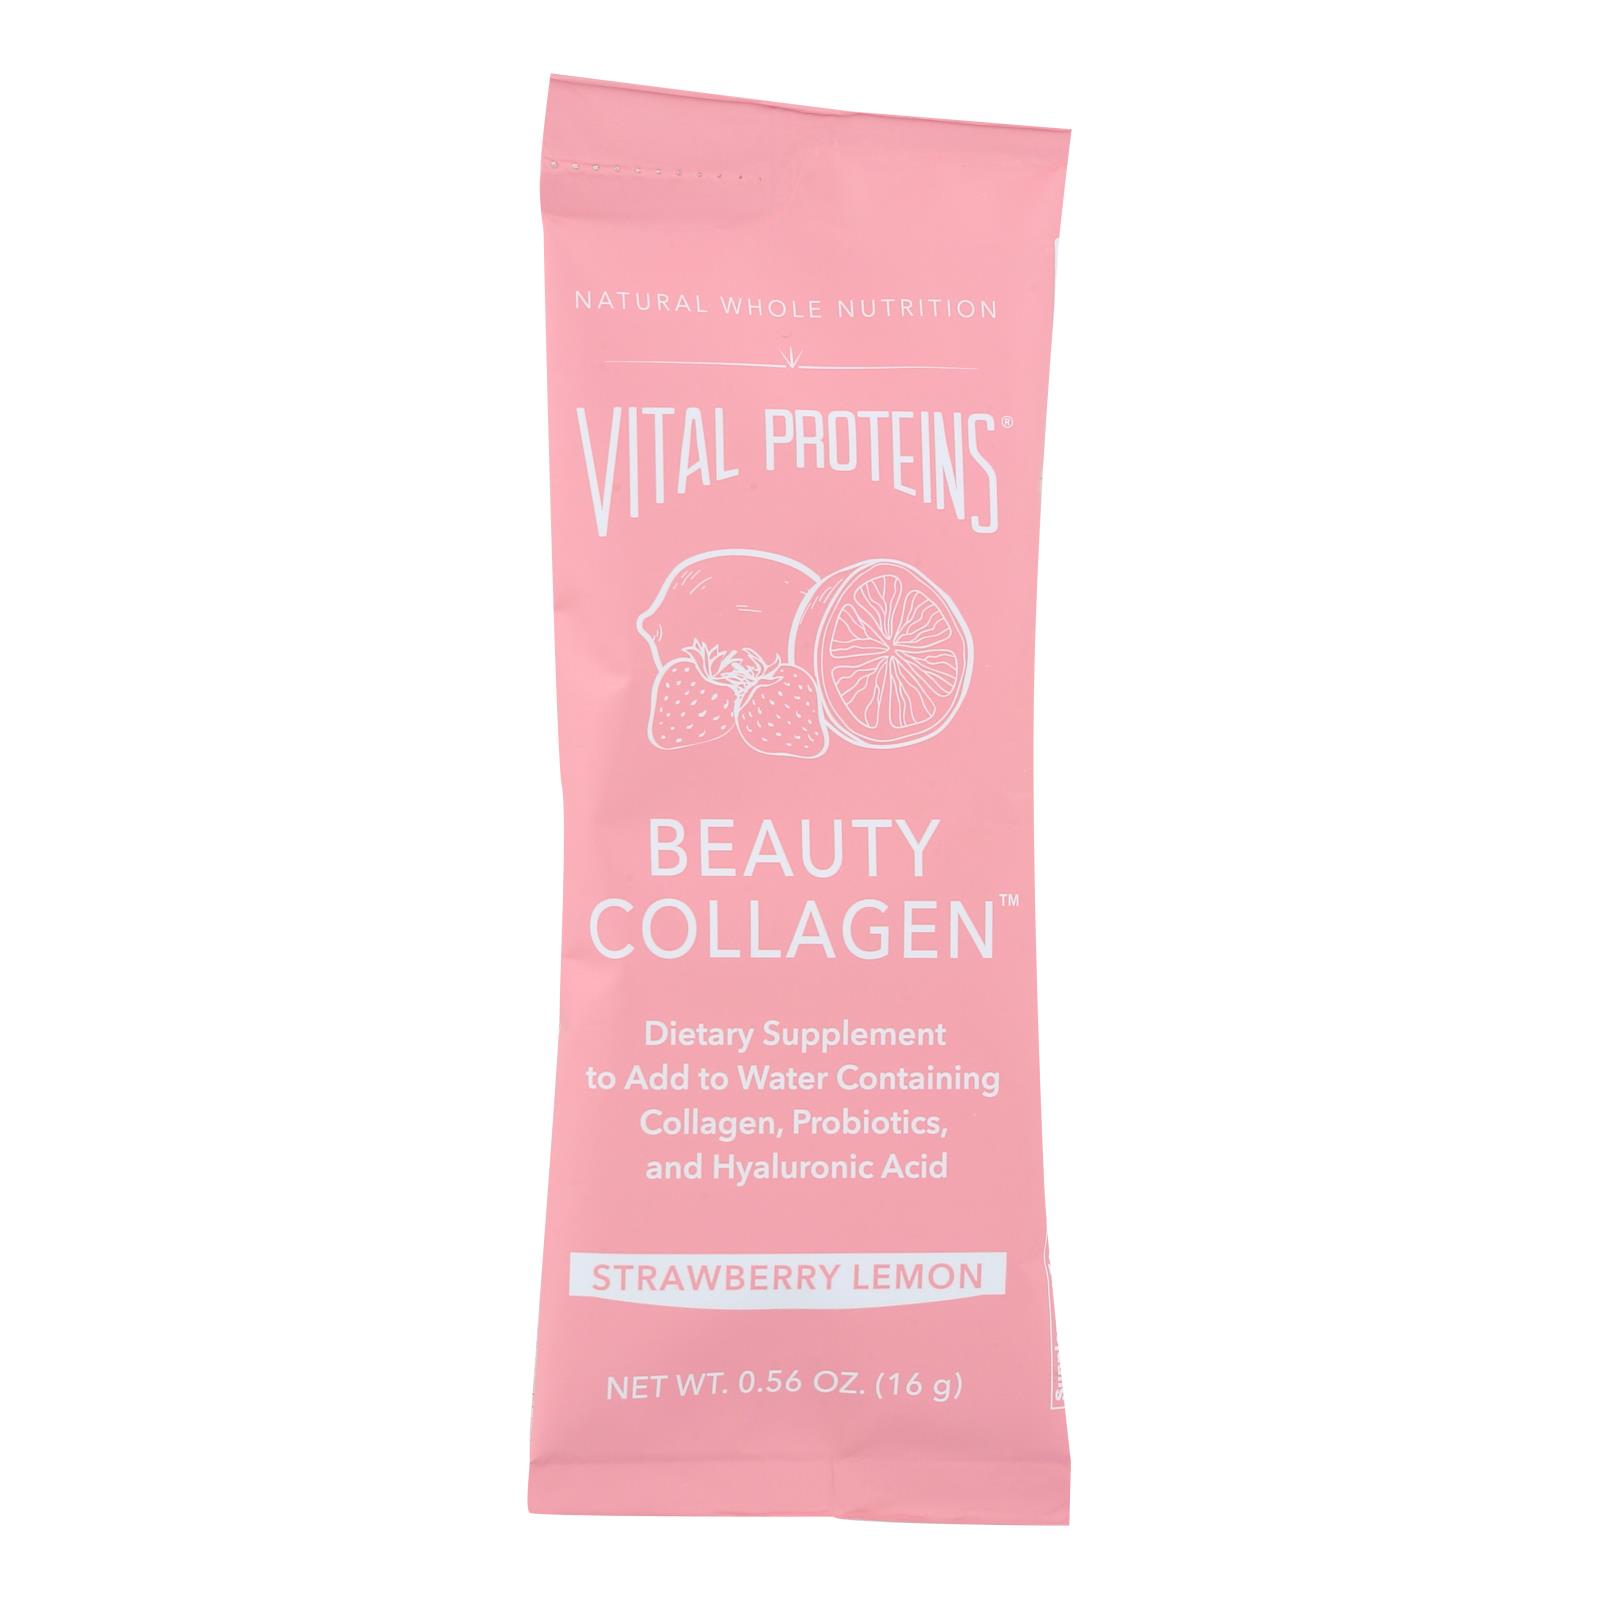 Vital Proteins Strawberry Lemon Beauty Collagen - 14개 묶음상품 - .56 OZ